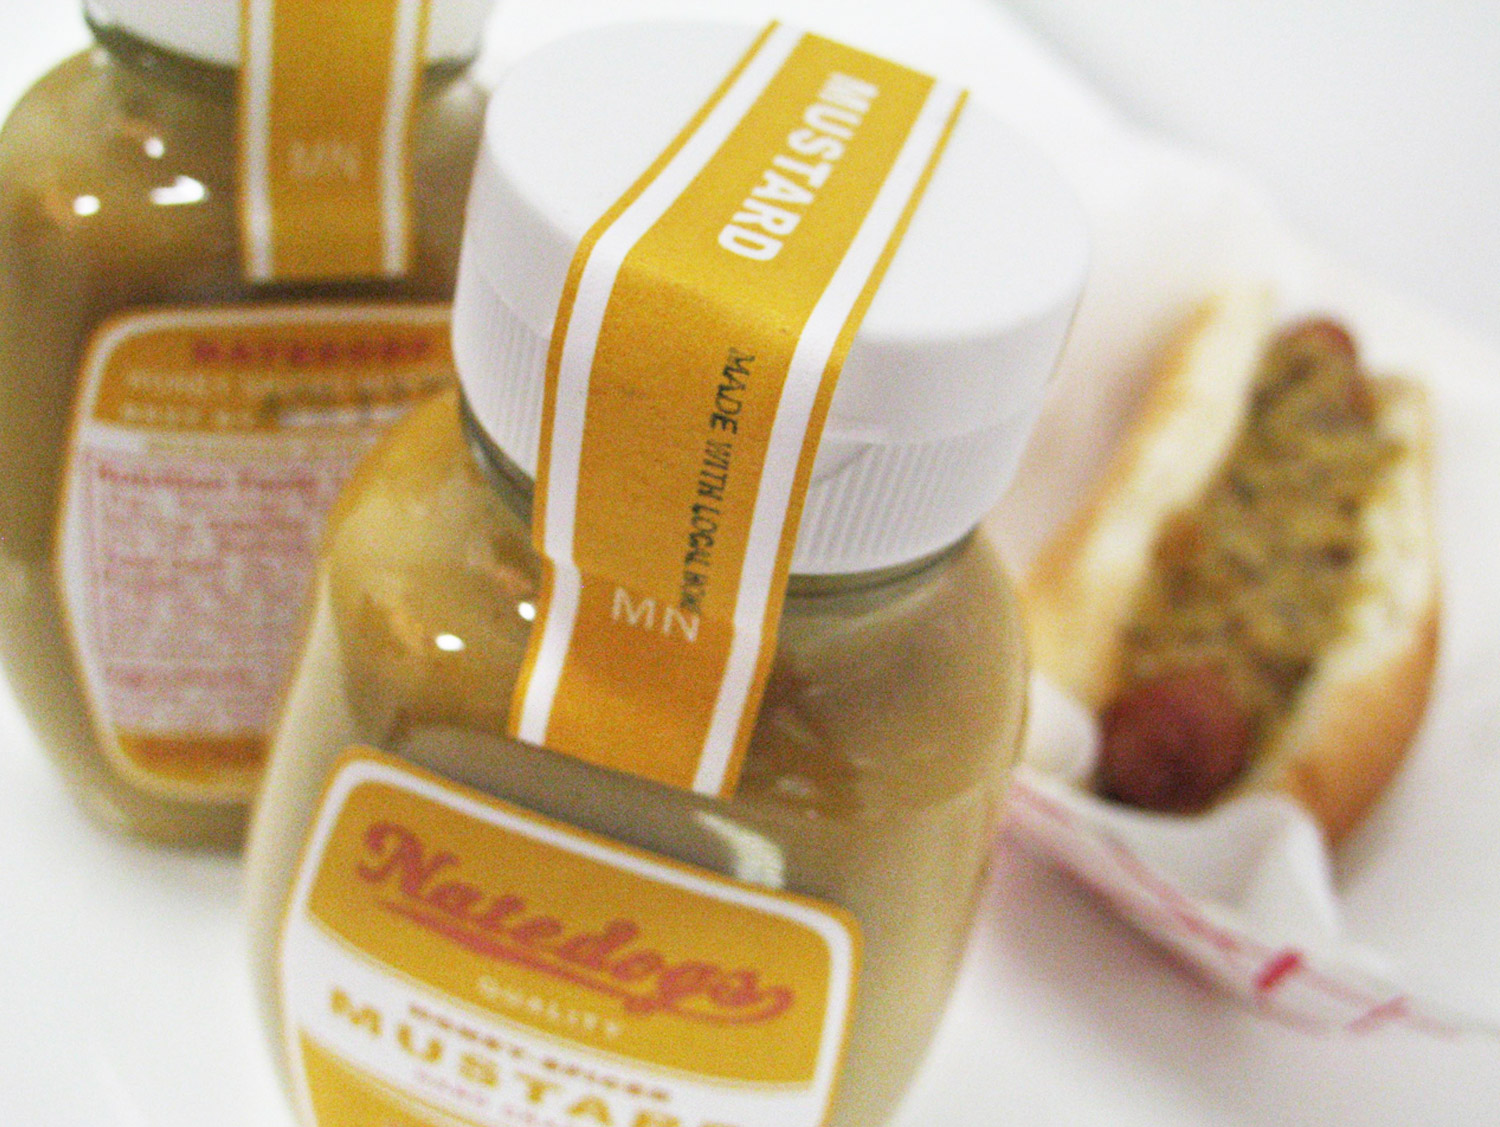 Natedogs-Mustard-Packaging-02.jpg